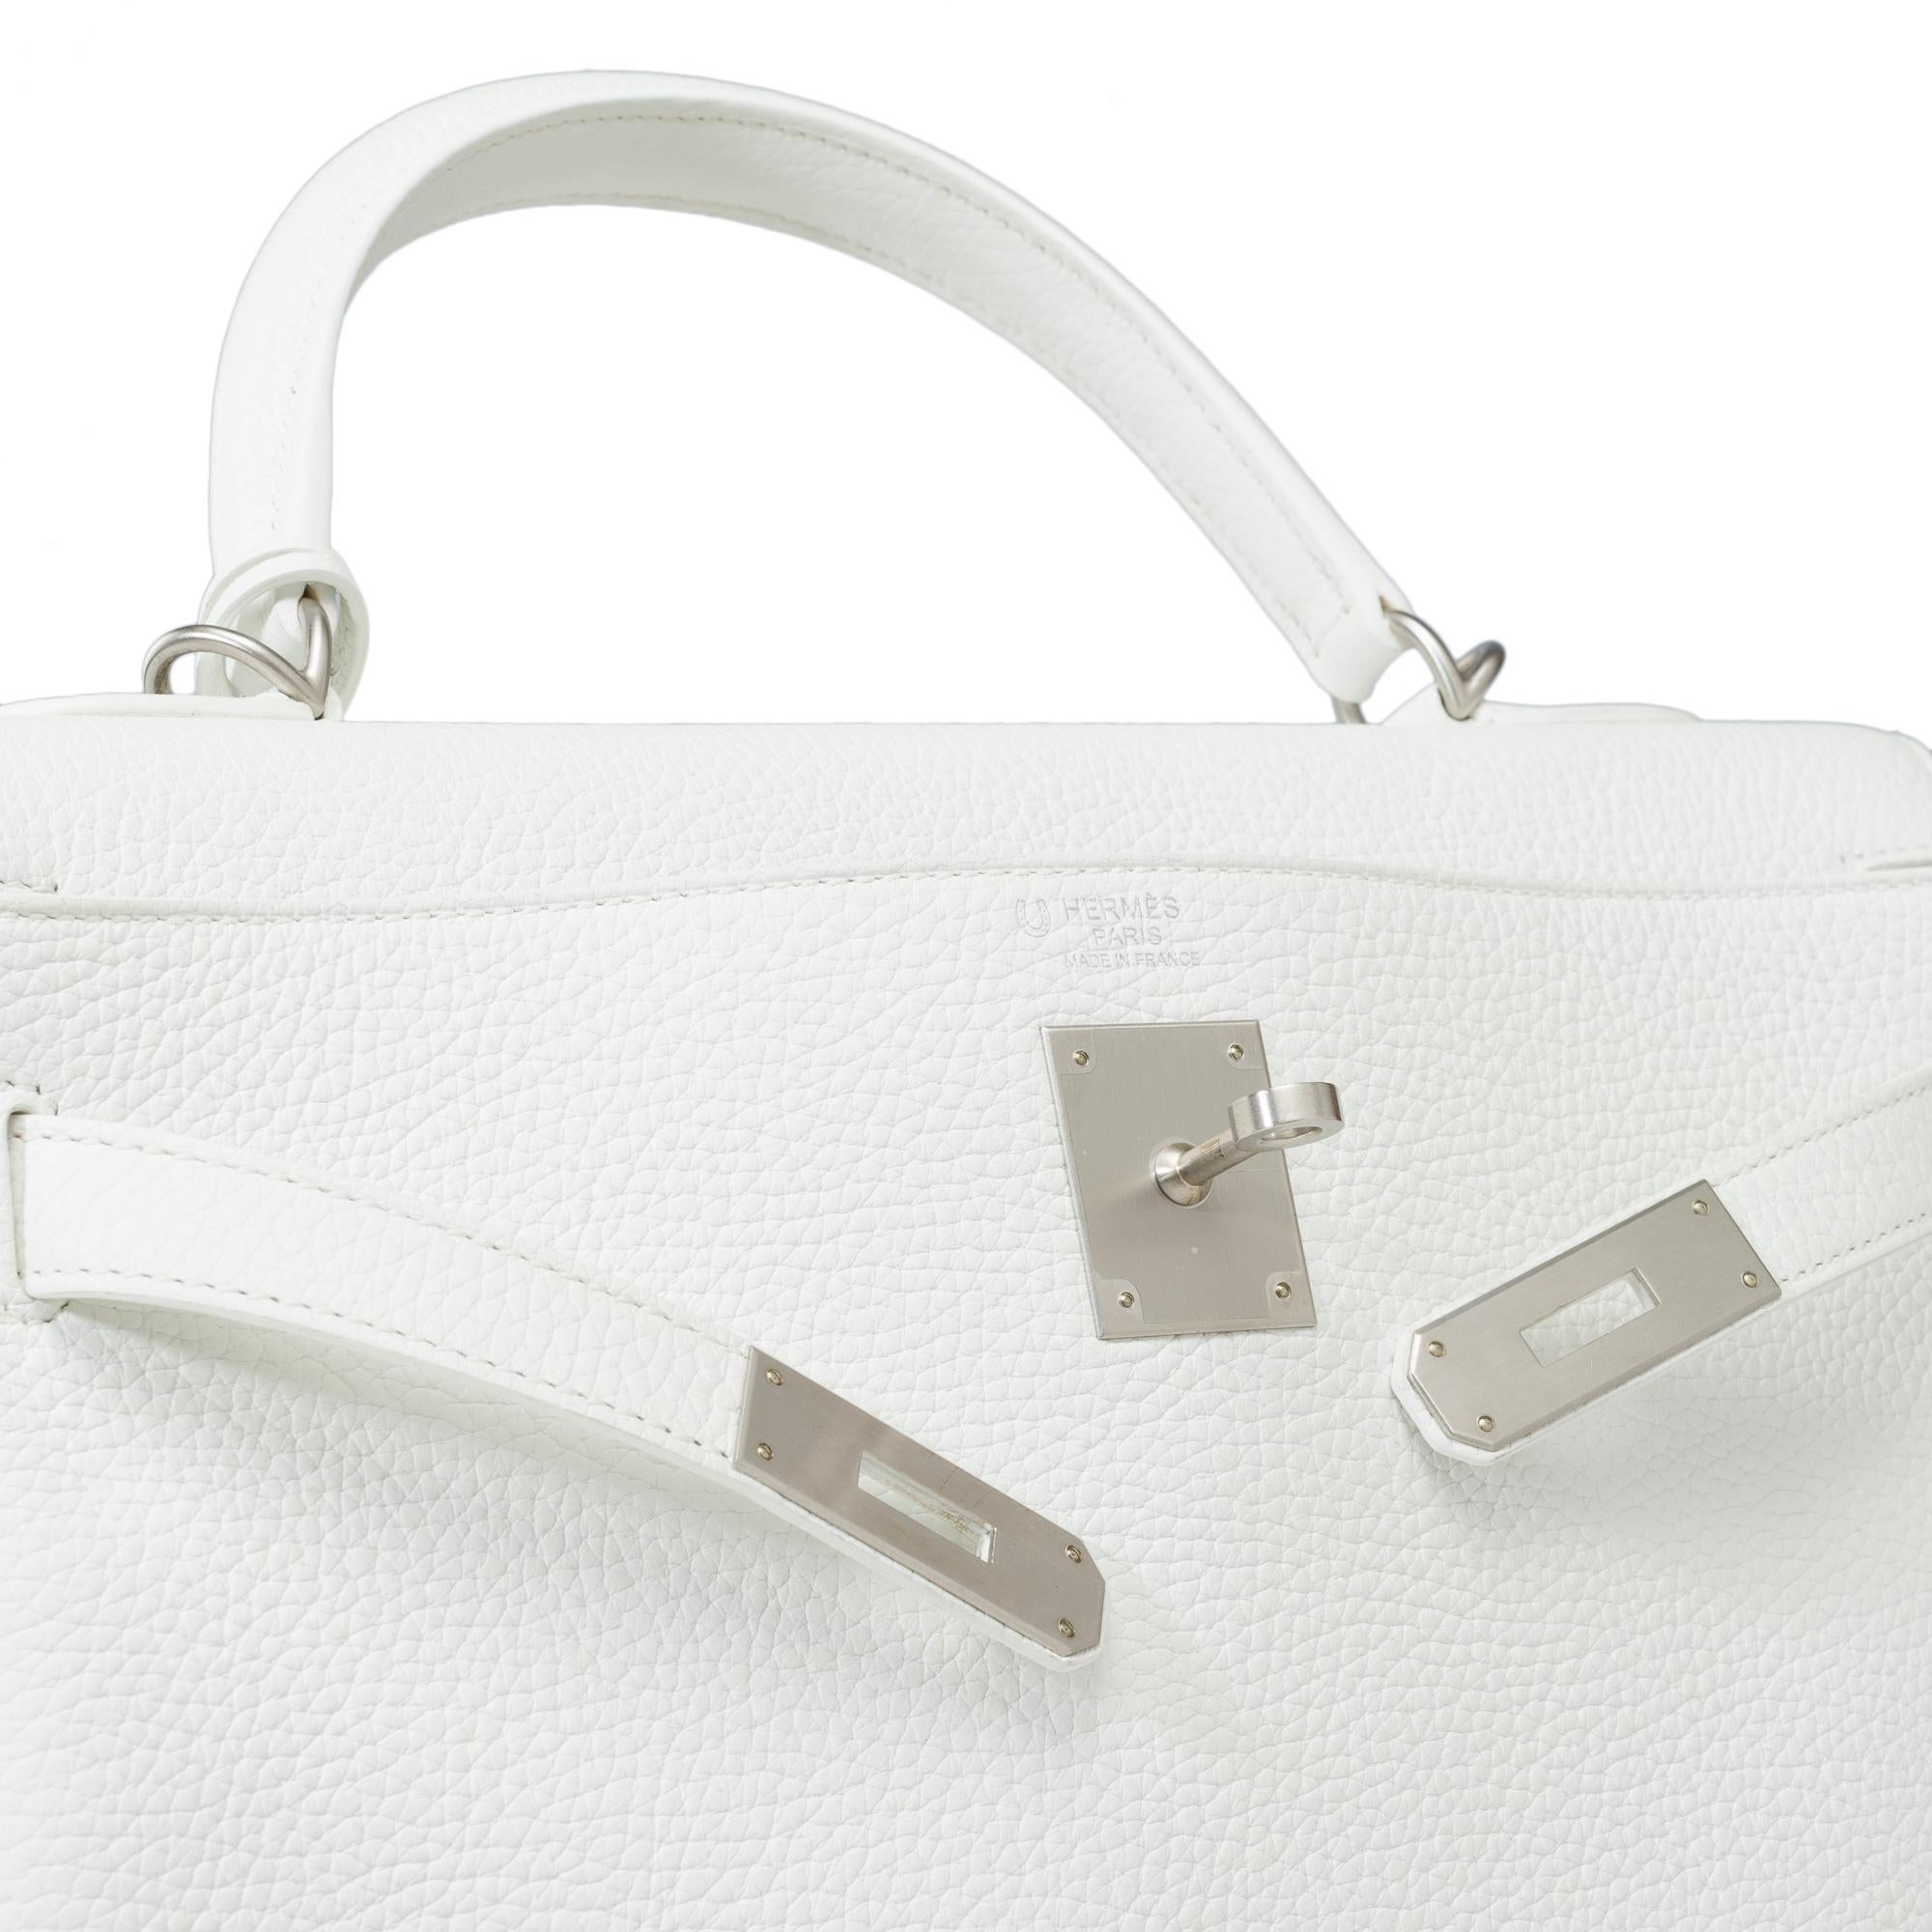 Hermès Kelly 32 handbag strap (HSO) in White & Grey interior leather, BSHW 3